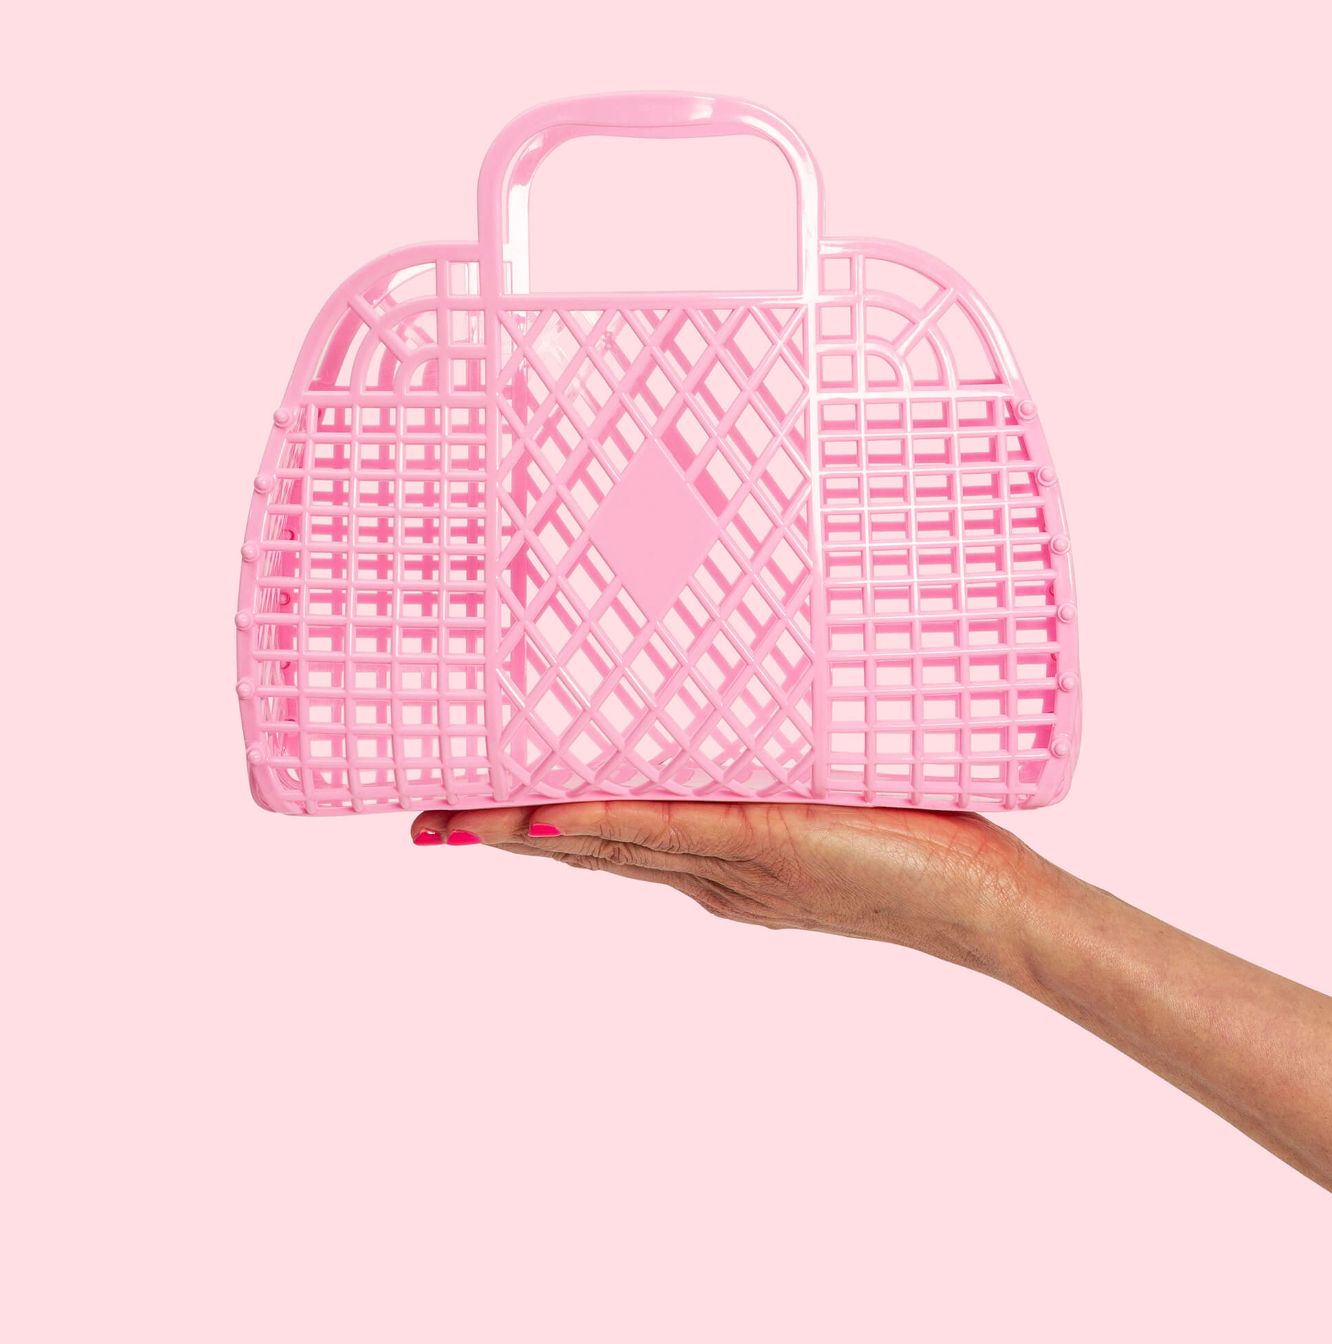 Sunjellies - retro basket - small - bubblegum pink